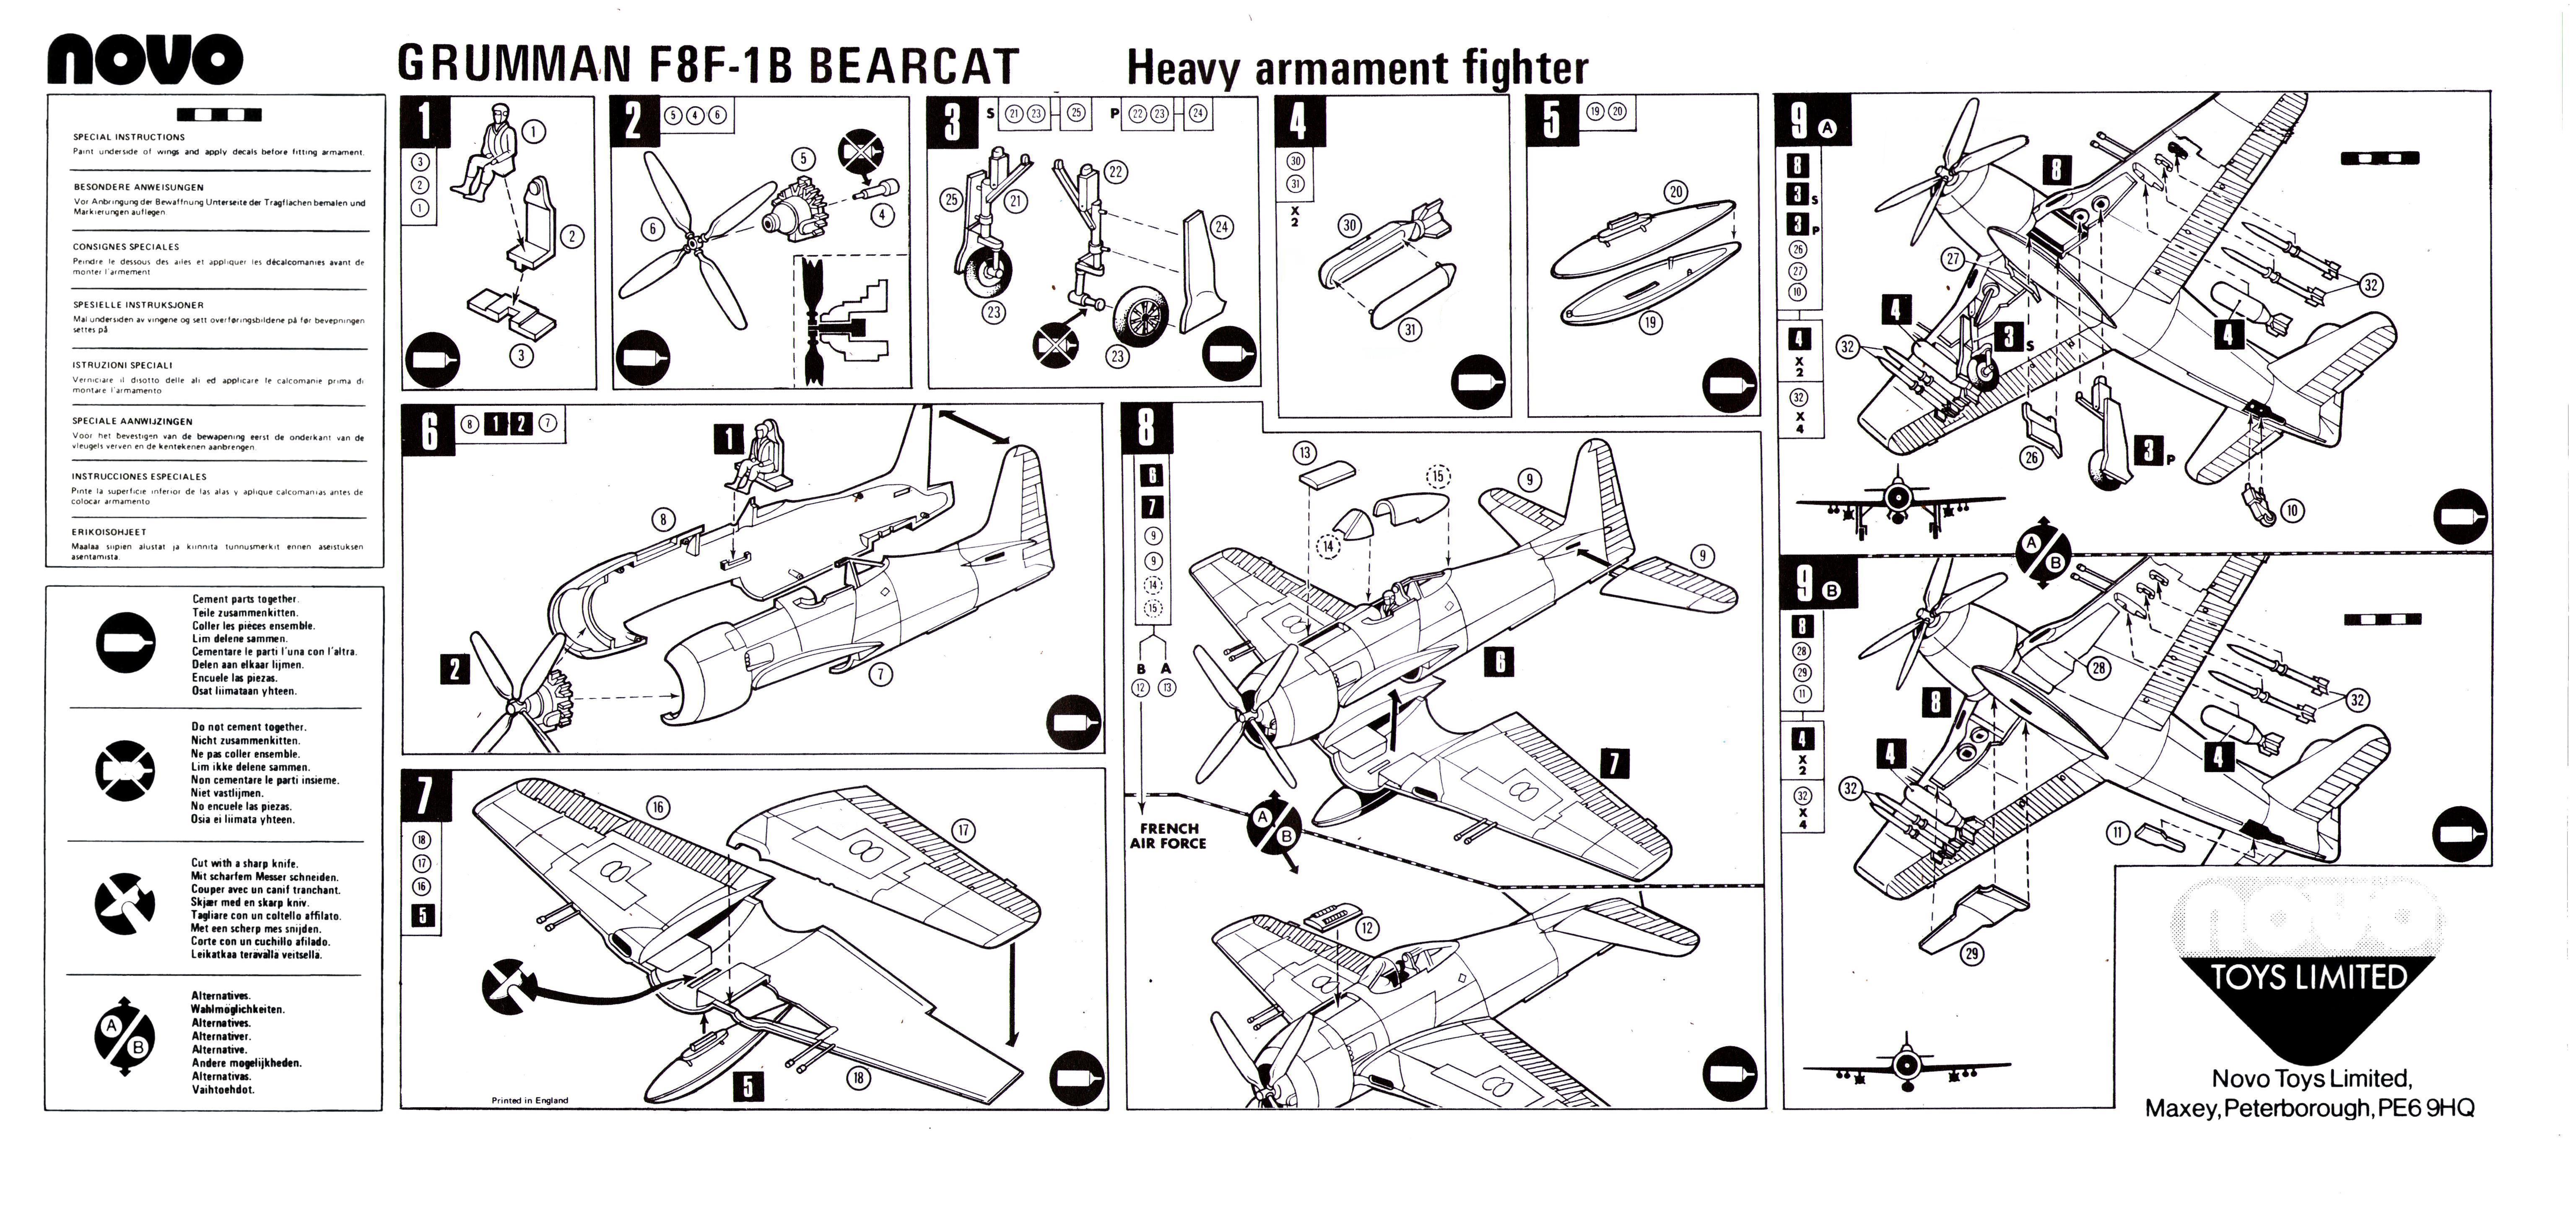 NOVO F407 Grumman F8F-1B Bearcat Cat.No.78080, NOVO Toys Ltd, 1979 реконструкция инструкции по сборке